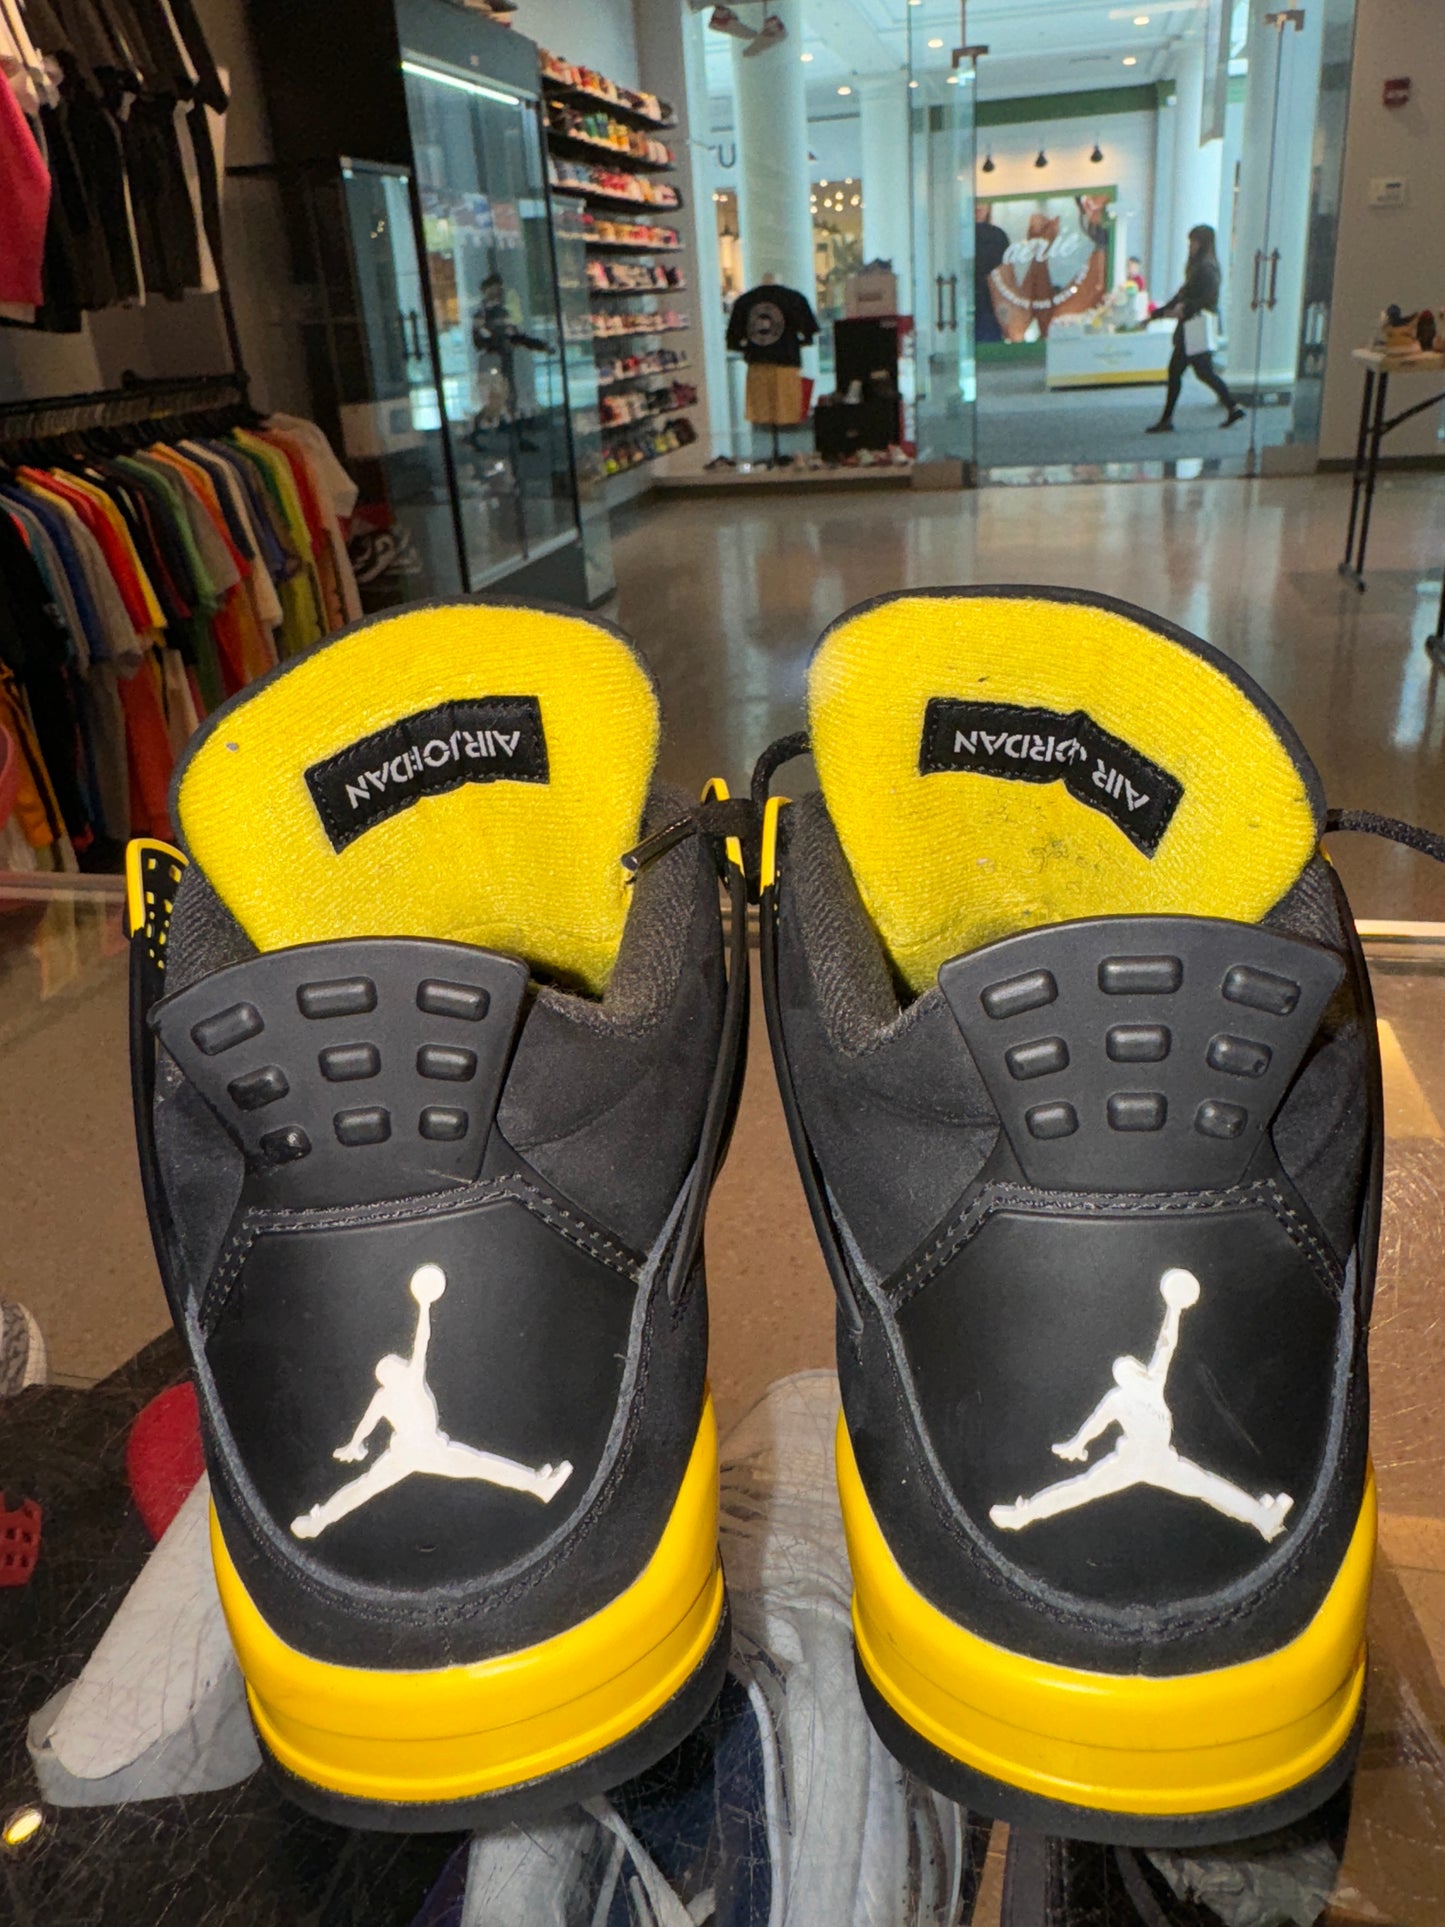 Size 7 Air Jordan 4 “Thunder” (Mall)